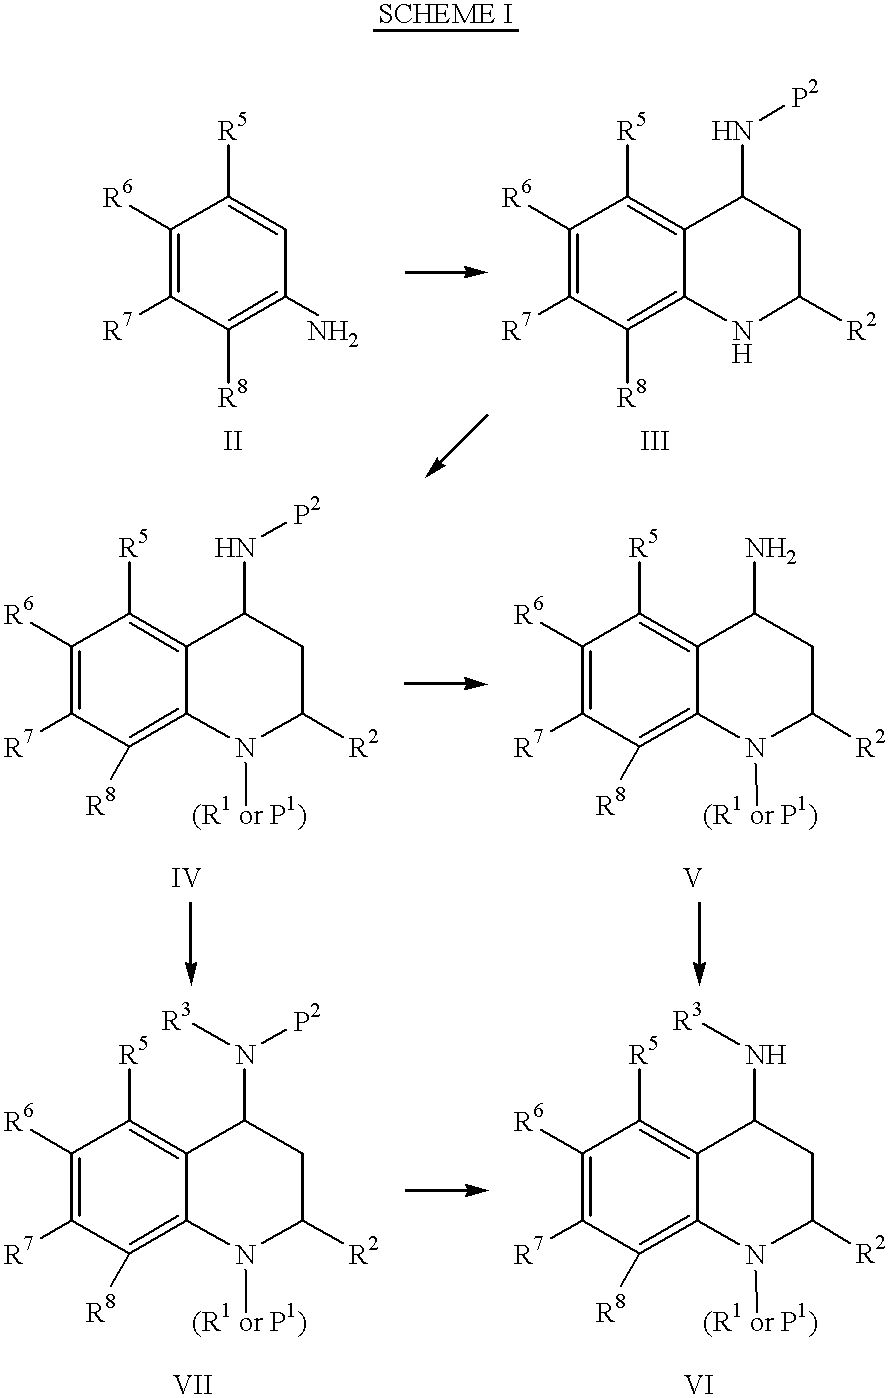 4-carboxyamino-2-substituted-1,2,3,4-tetrahydroquinolines